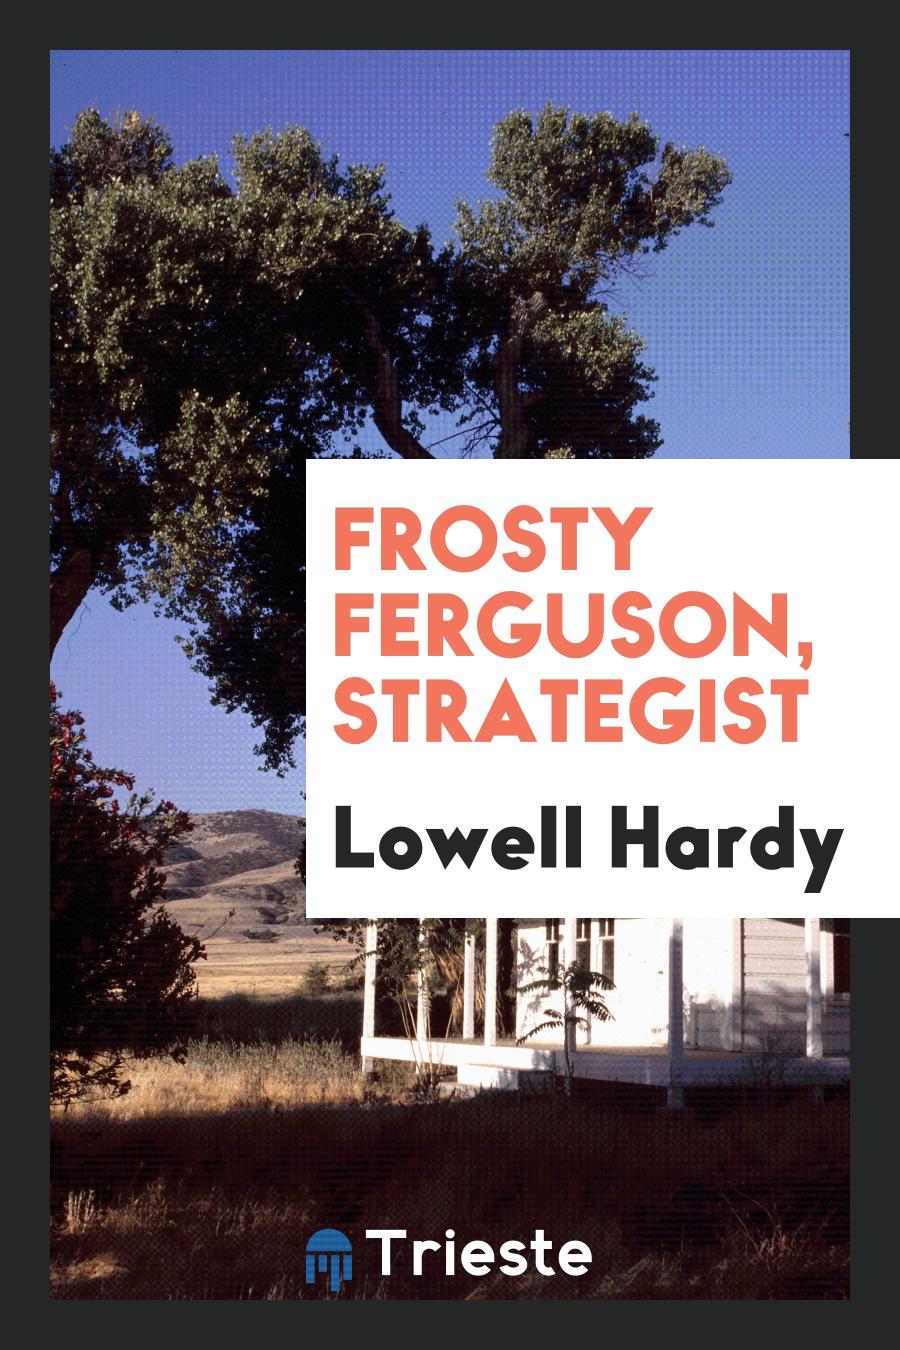 Frosty Ferguson, Strategist